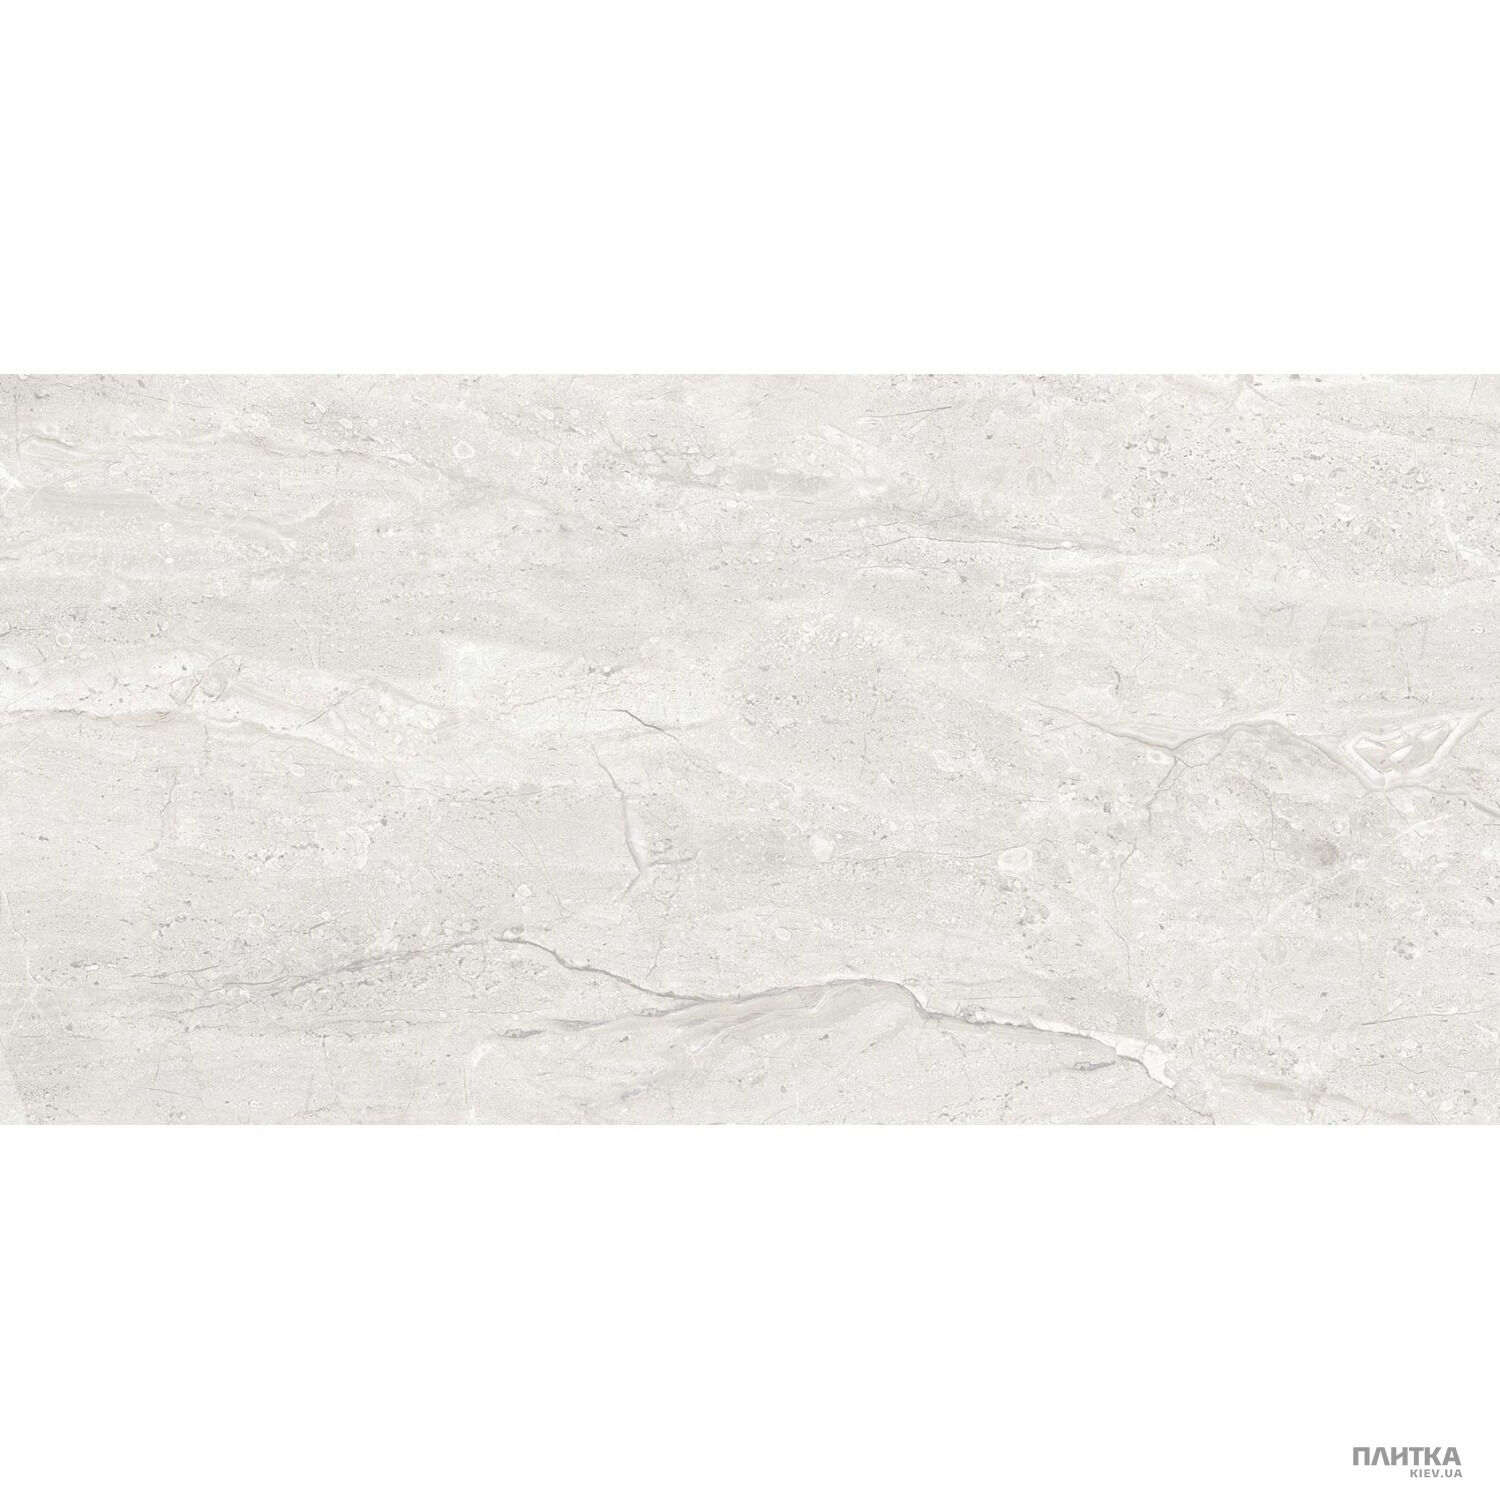 Плитка Golden Tile Marmo Milano MARMO MILANO светло-серый 8МG051 светло-серый